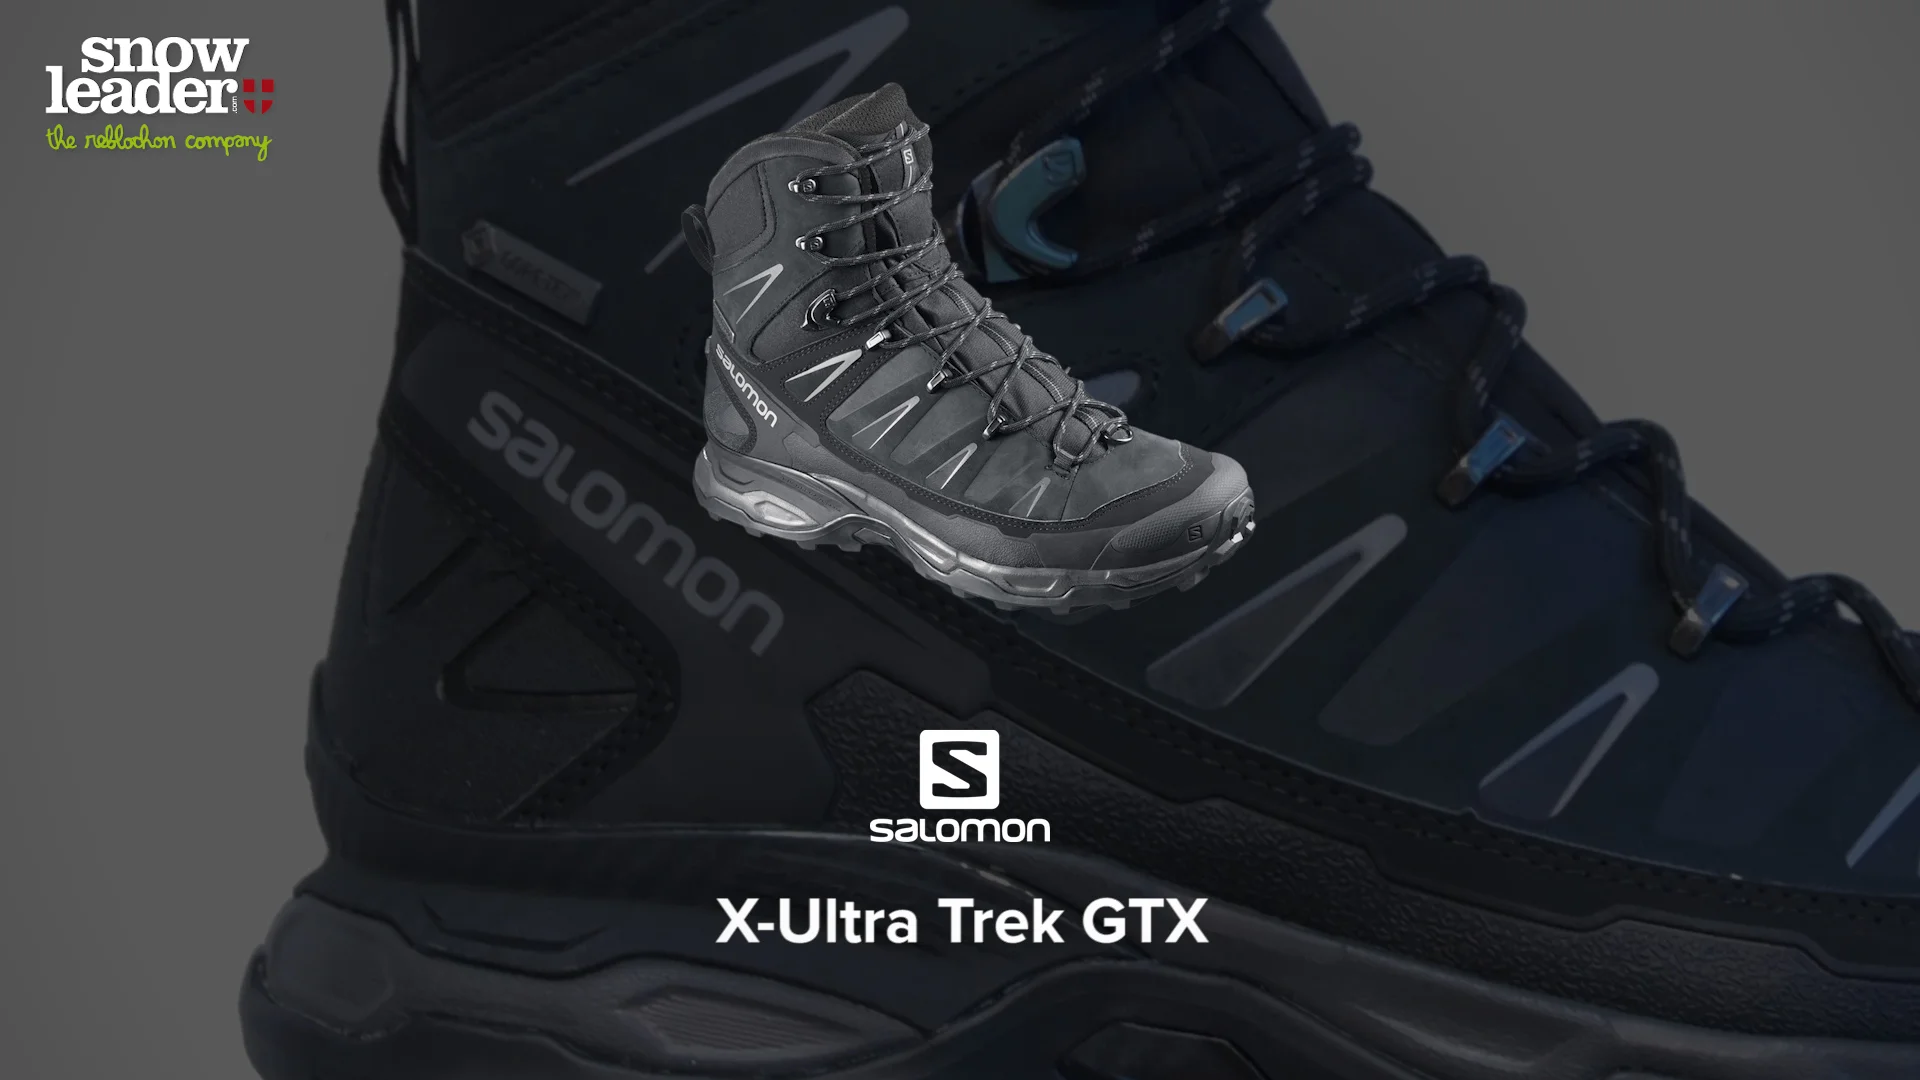 Salomon X-Ultra Trek GTX on Vimeo